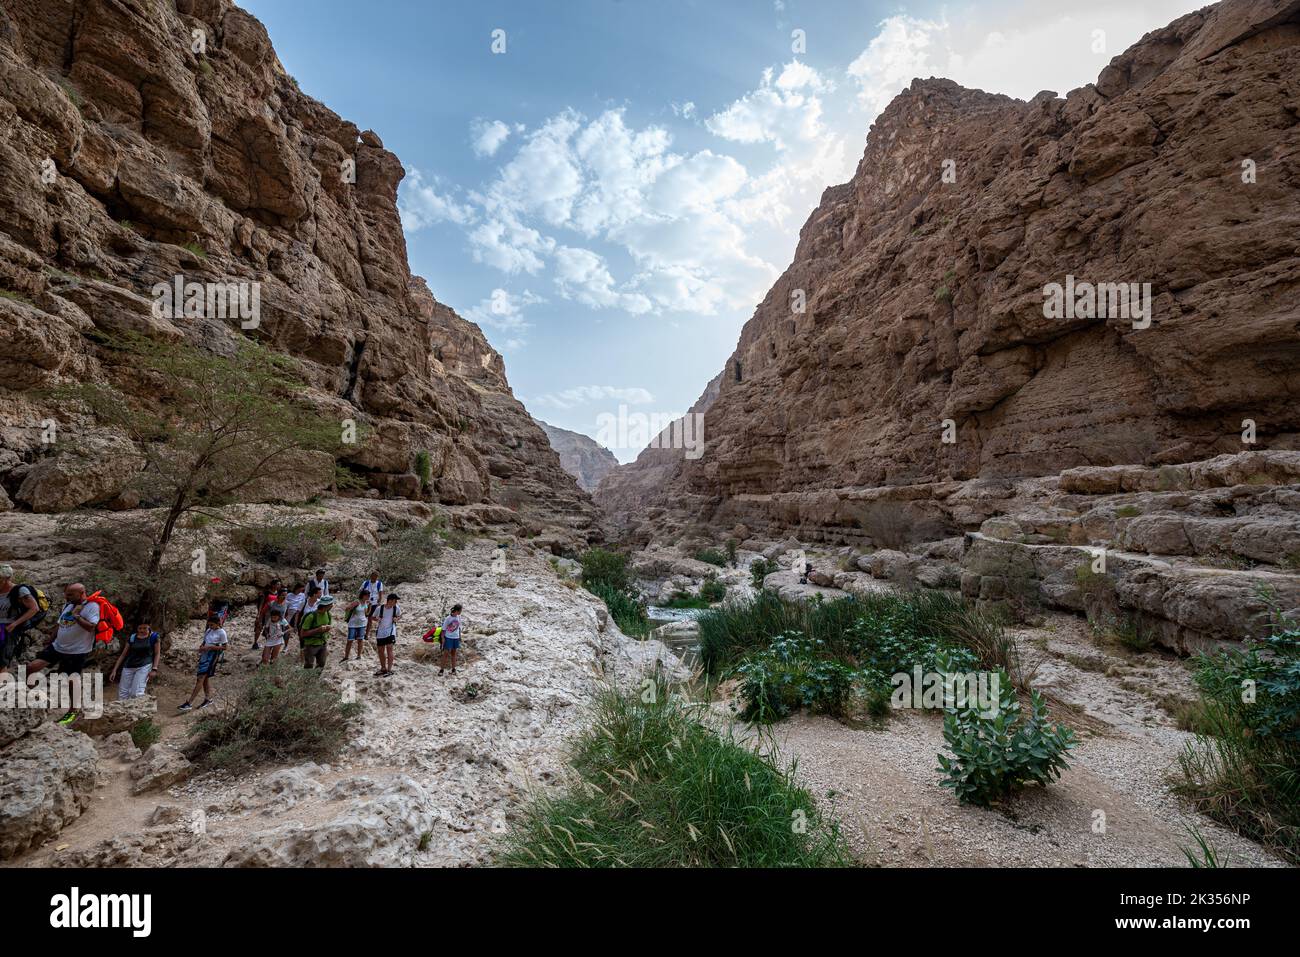 Wadi Shab gorge, Oman Stock Photo